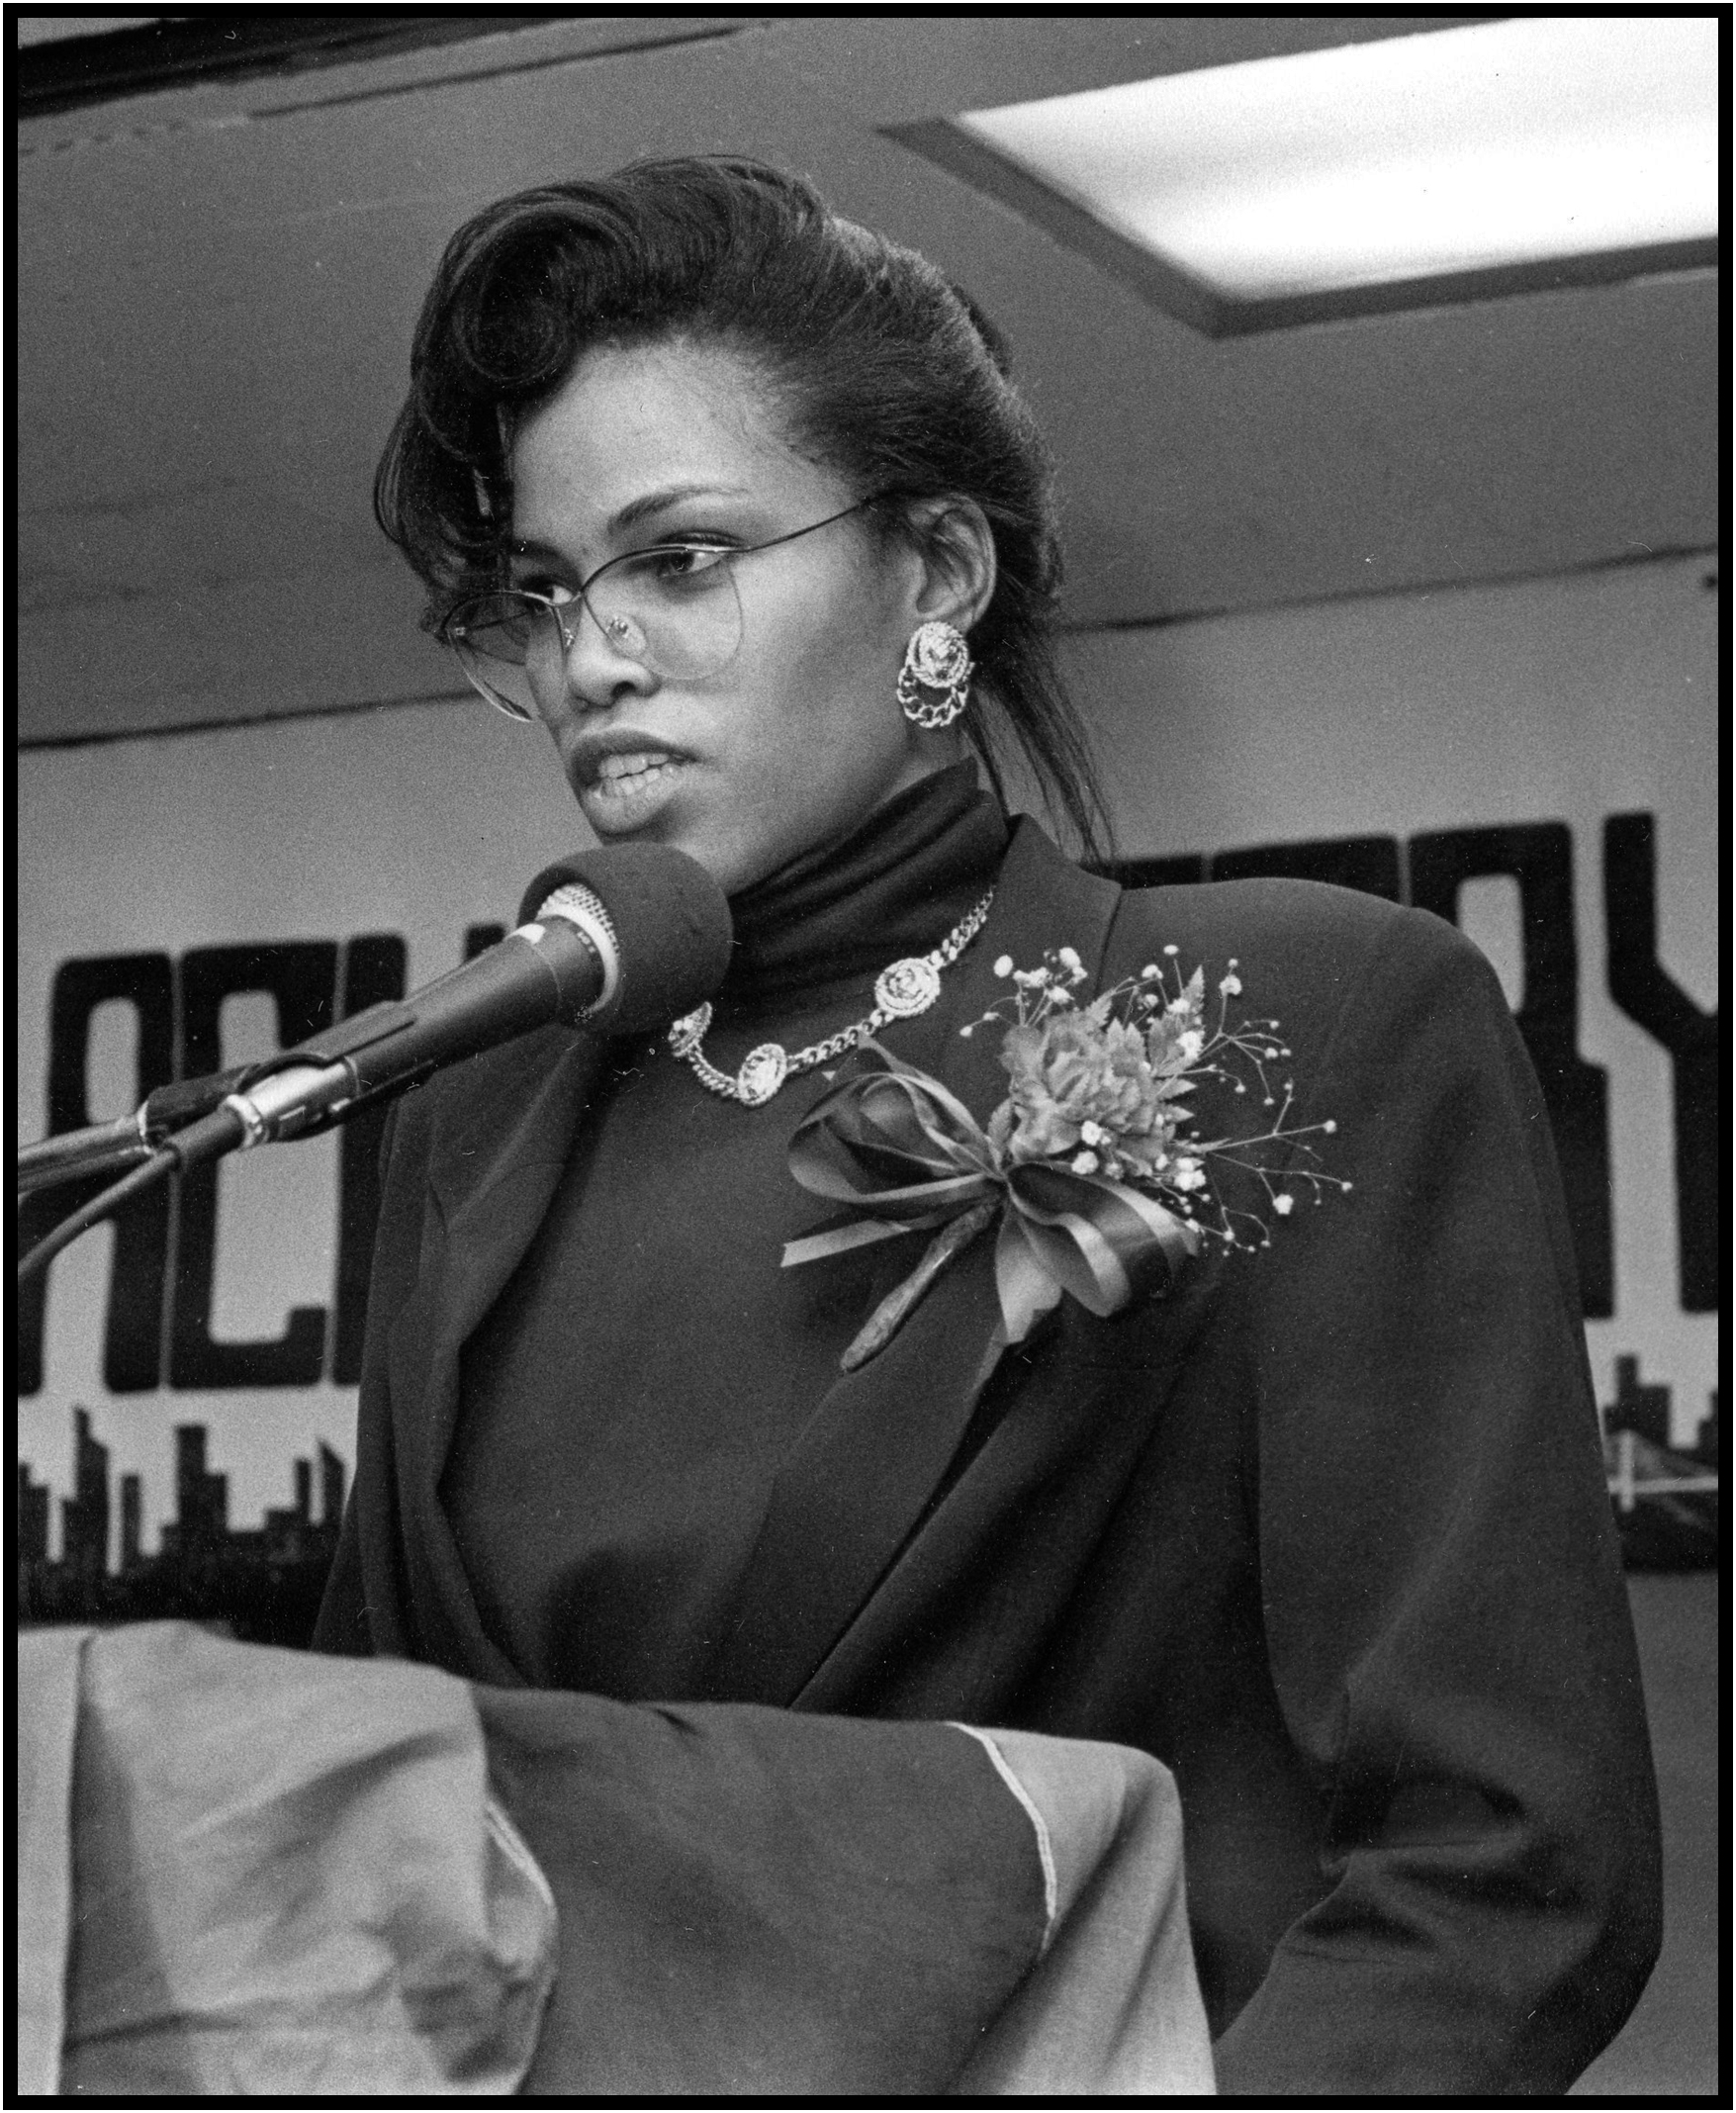   Milikah Shabbaz (Malcolm X's daughter), 1989.  